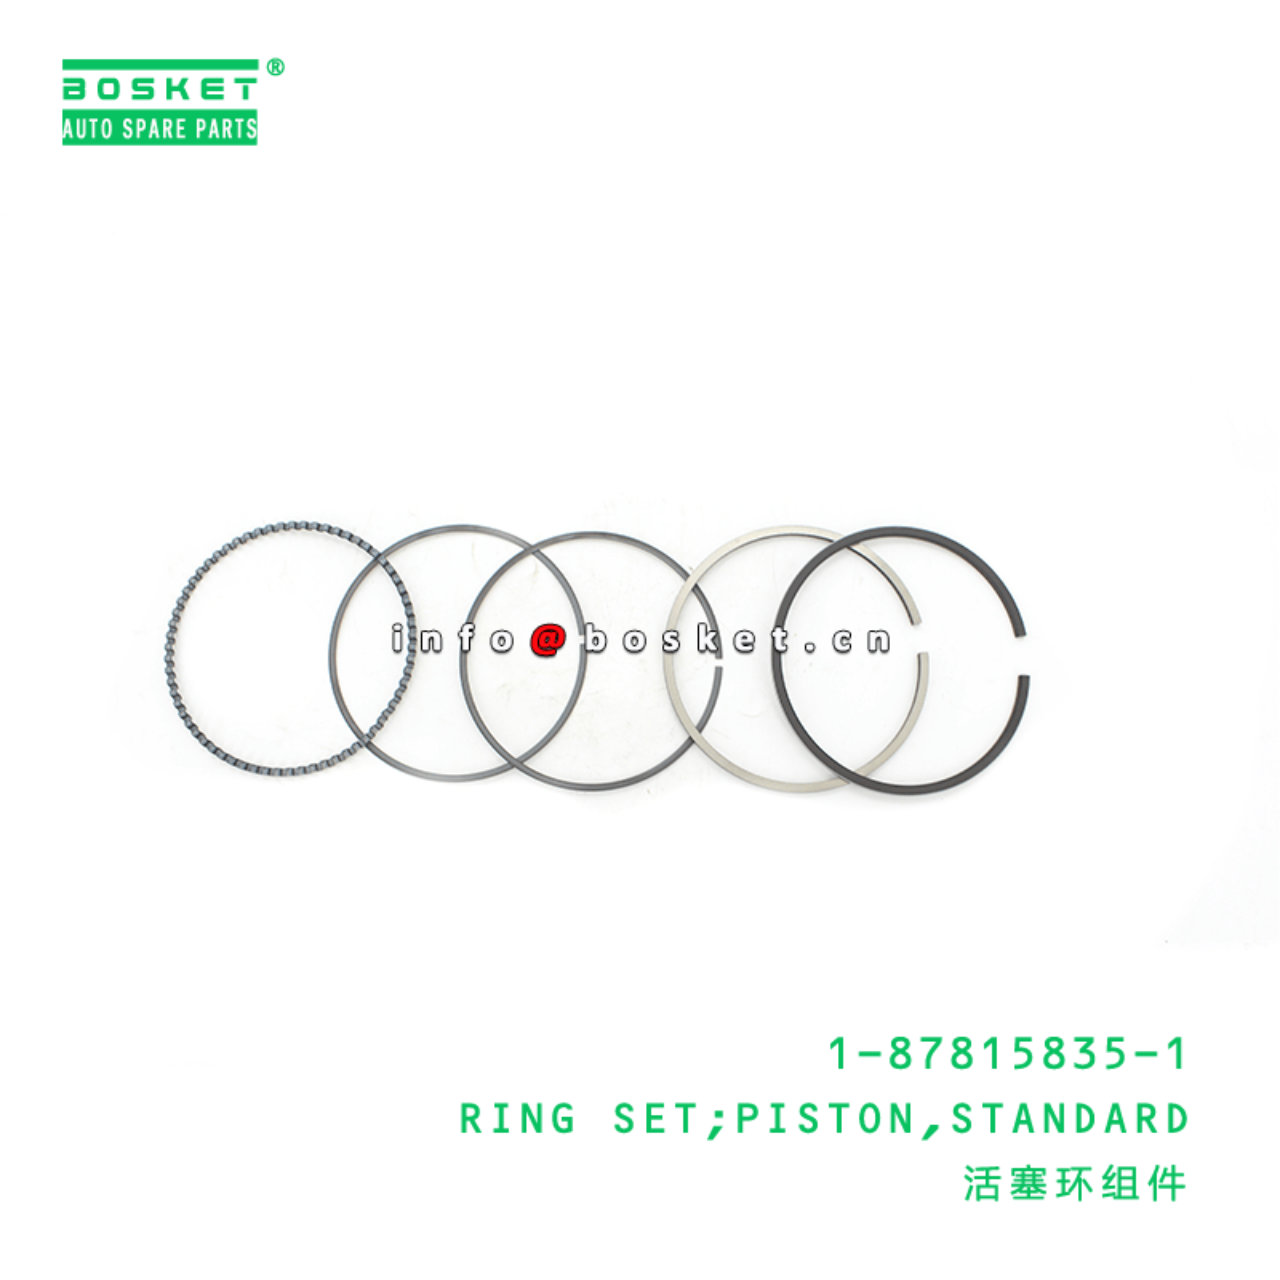 1-87815835-1 Standard Piston Ring Set 1878158351 Suitable for ISUZU LV